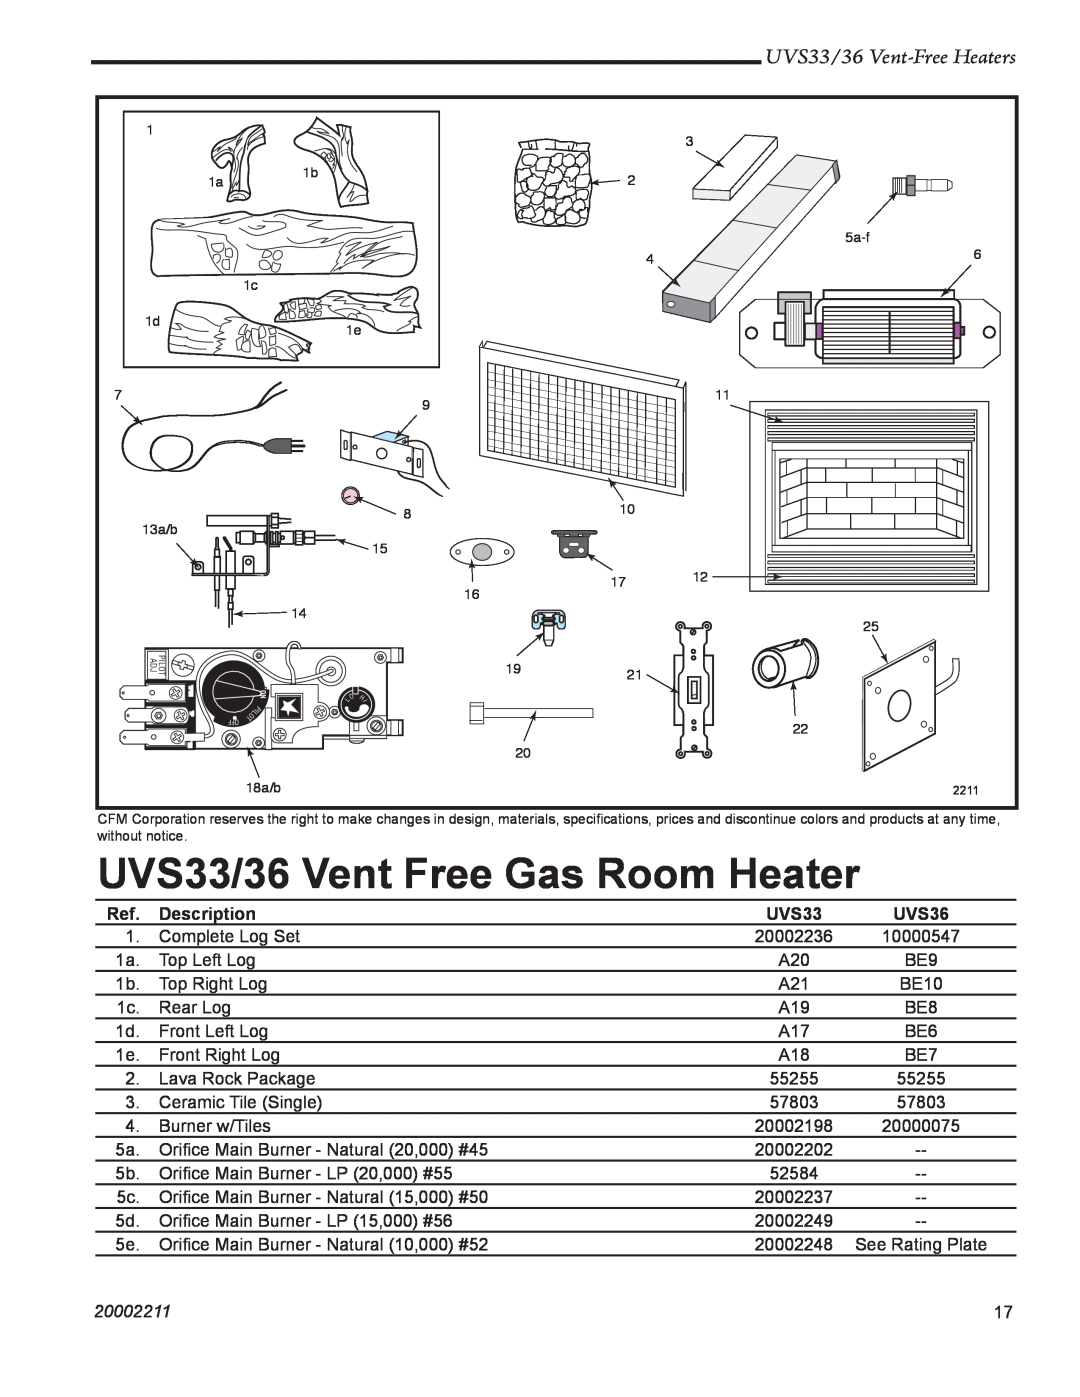 Majestic Appliances UVS36RN, UVS33RP UVS33/36 Vent Free Gas Room Heater, UVS33/36 Vent-FreeHeaters, Description, 20002211 